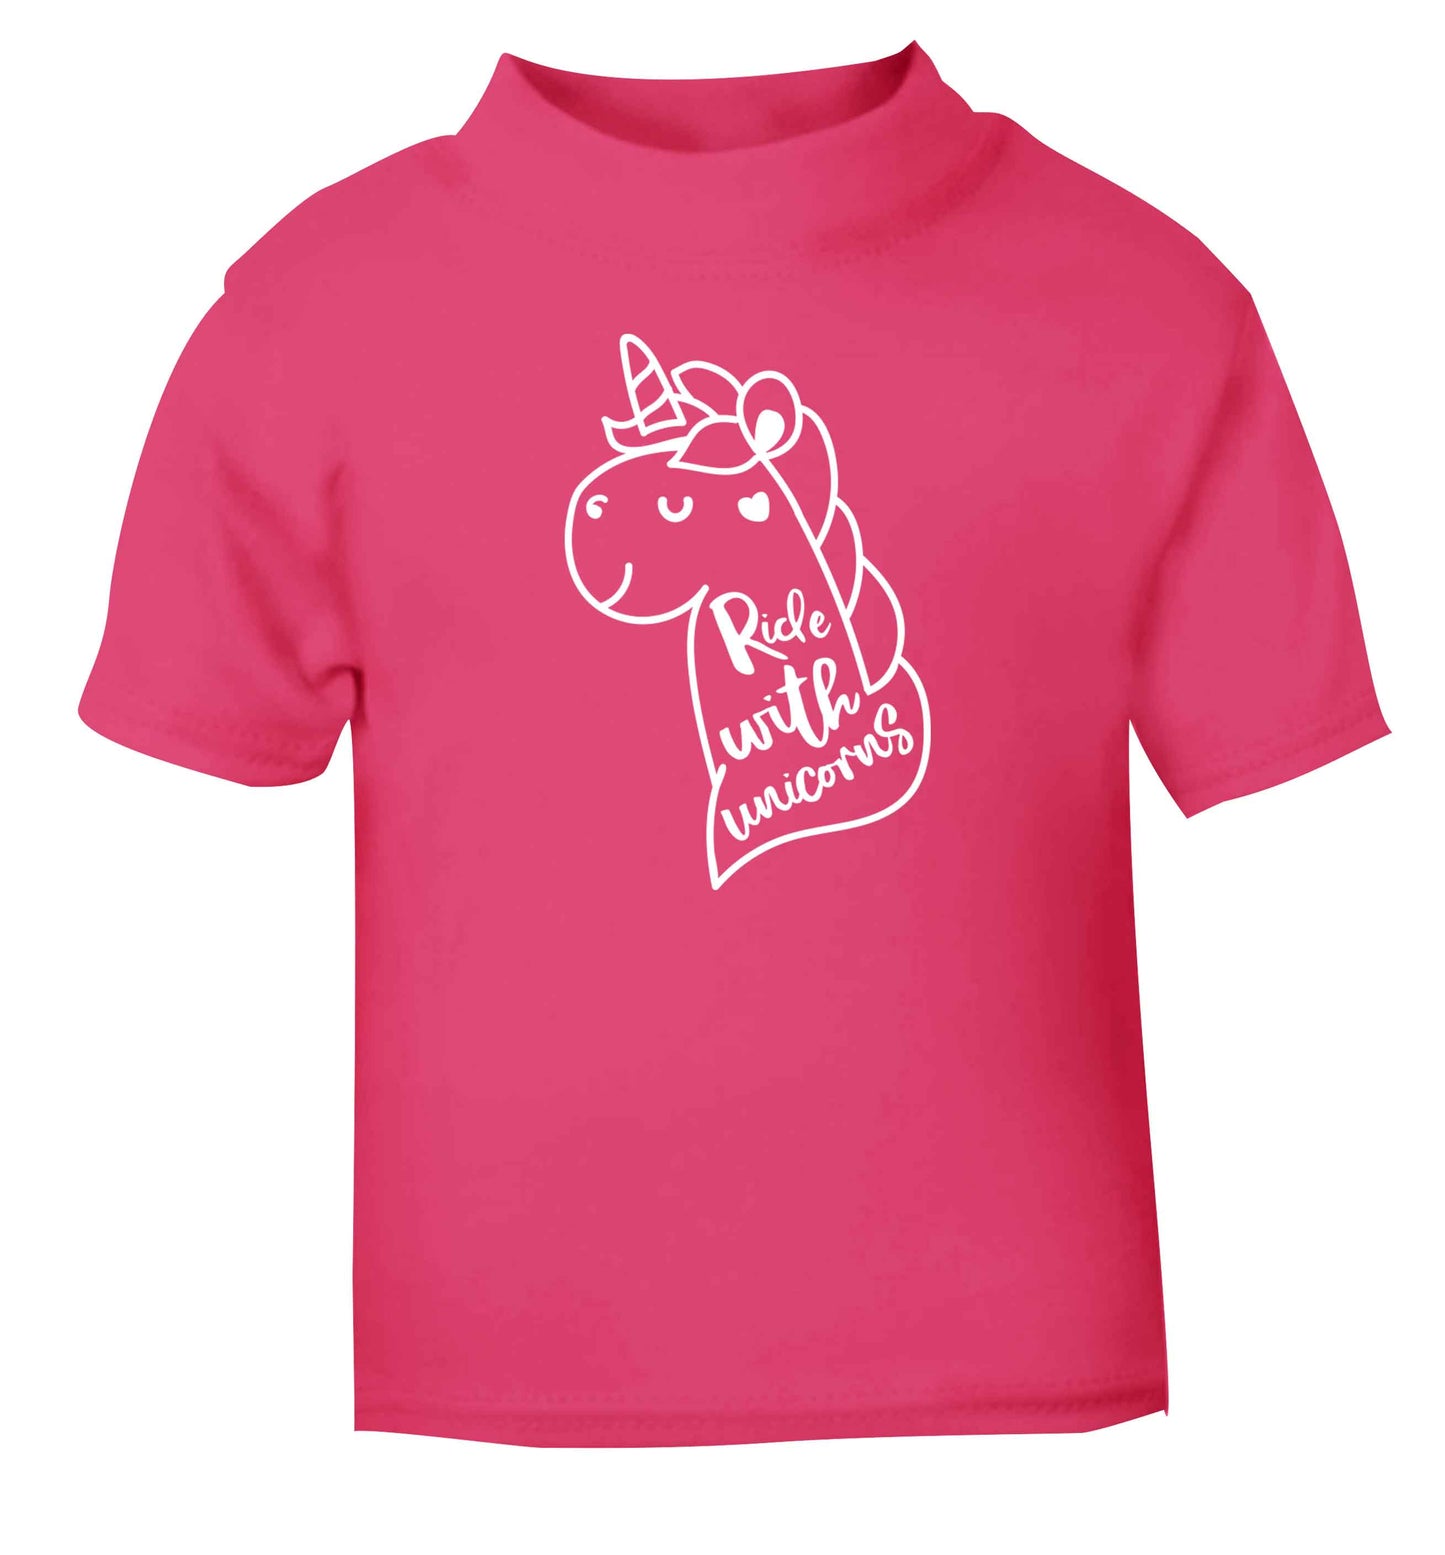 Ride with unicorns pink Baby Toddler Tshirt 2 Years